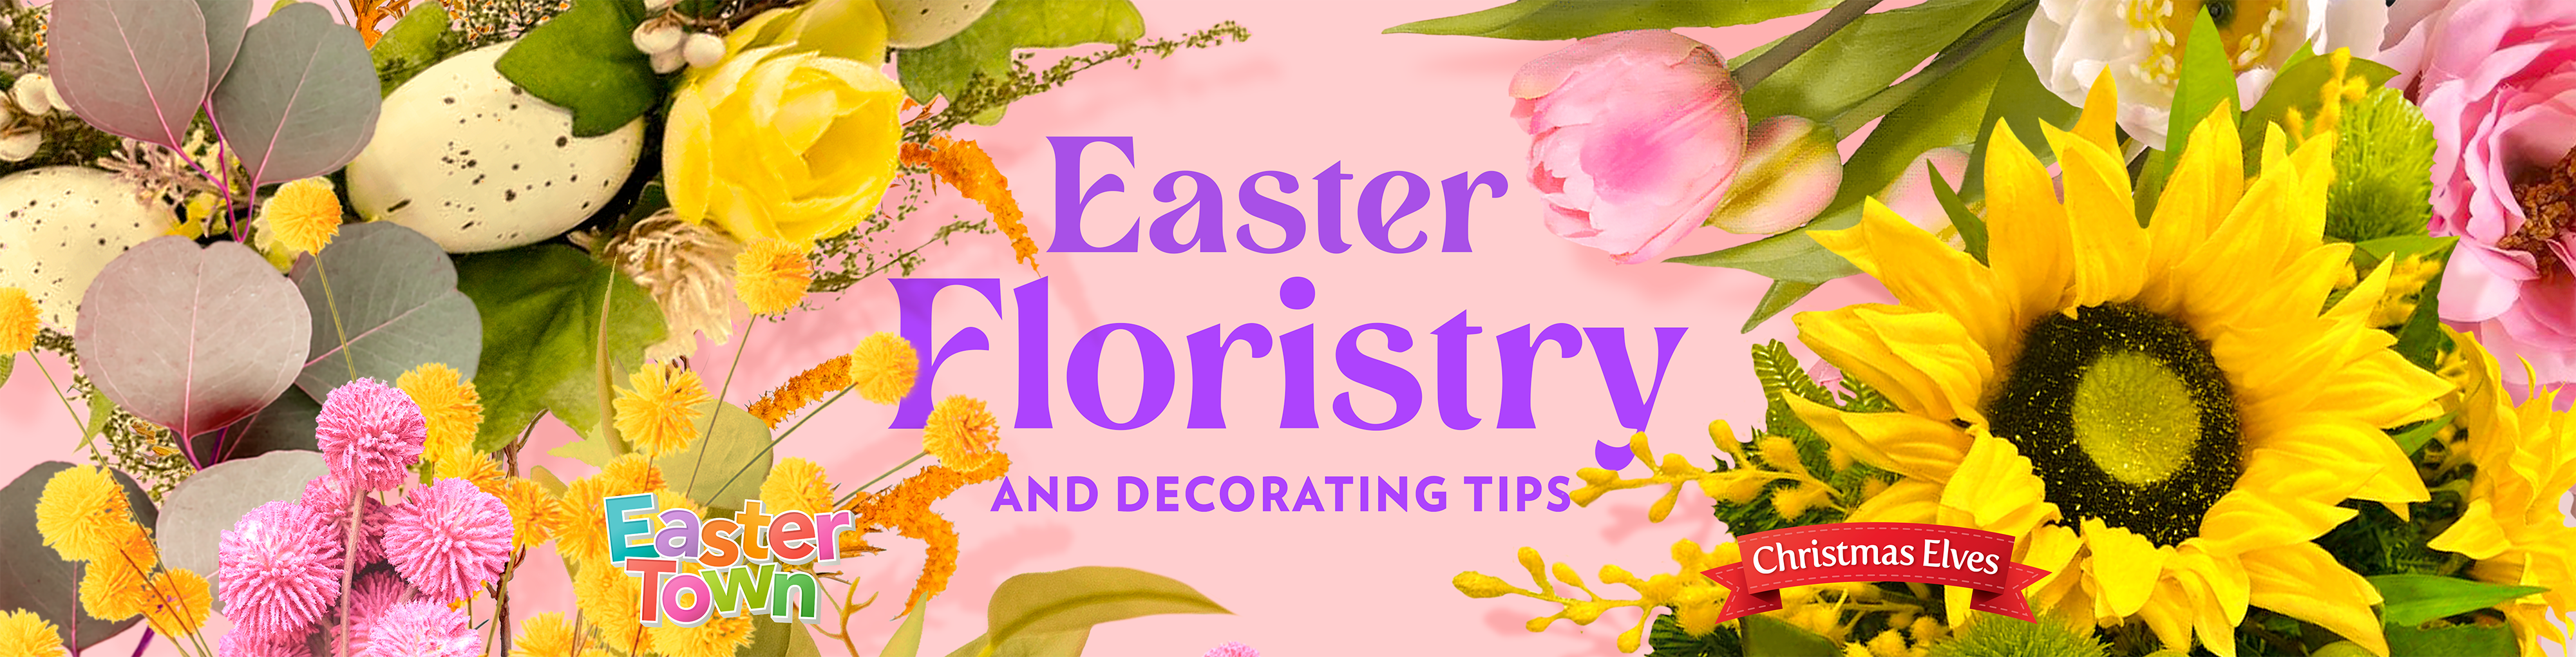 Easter Floristry